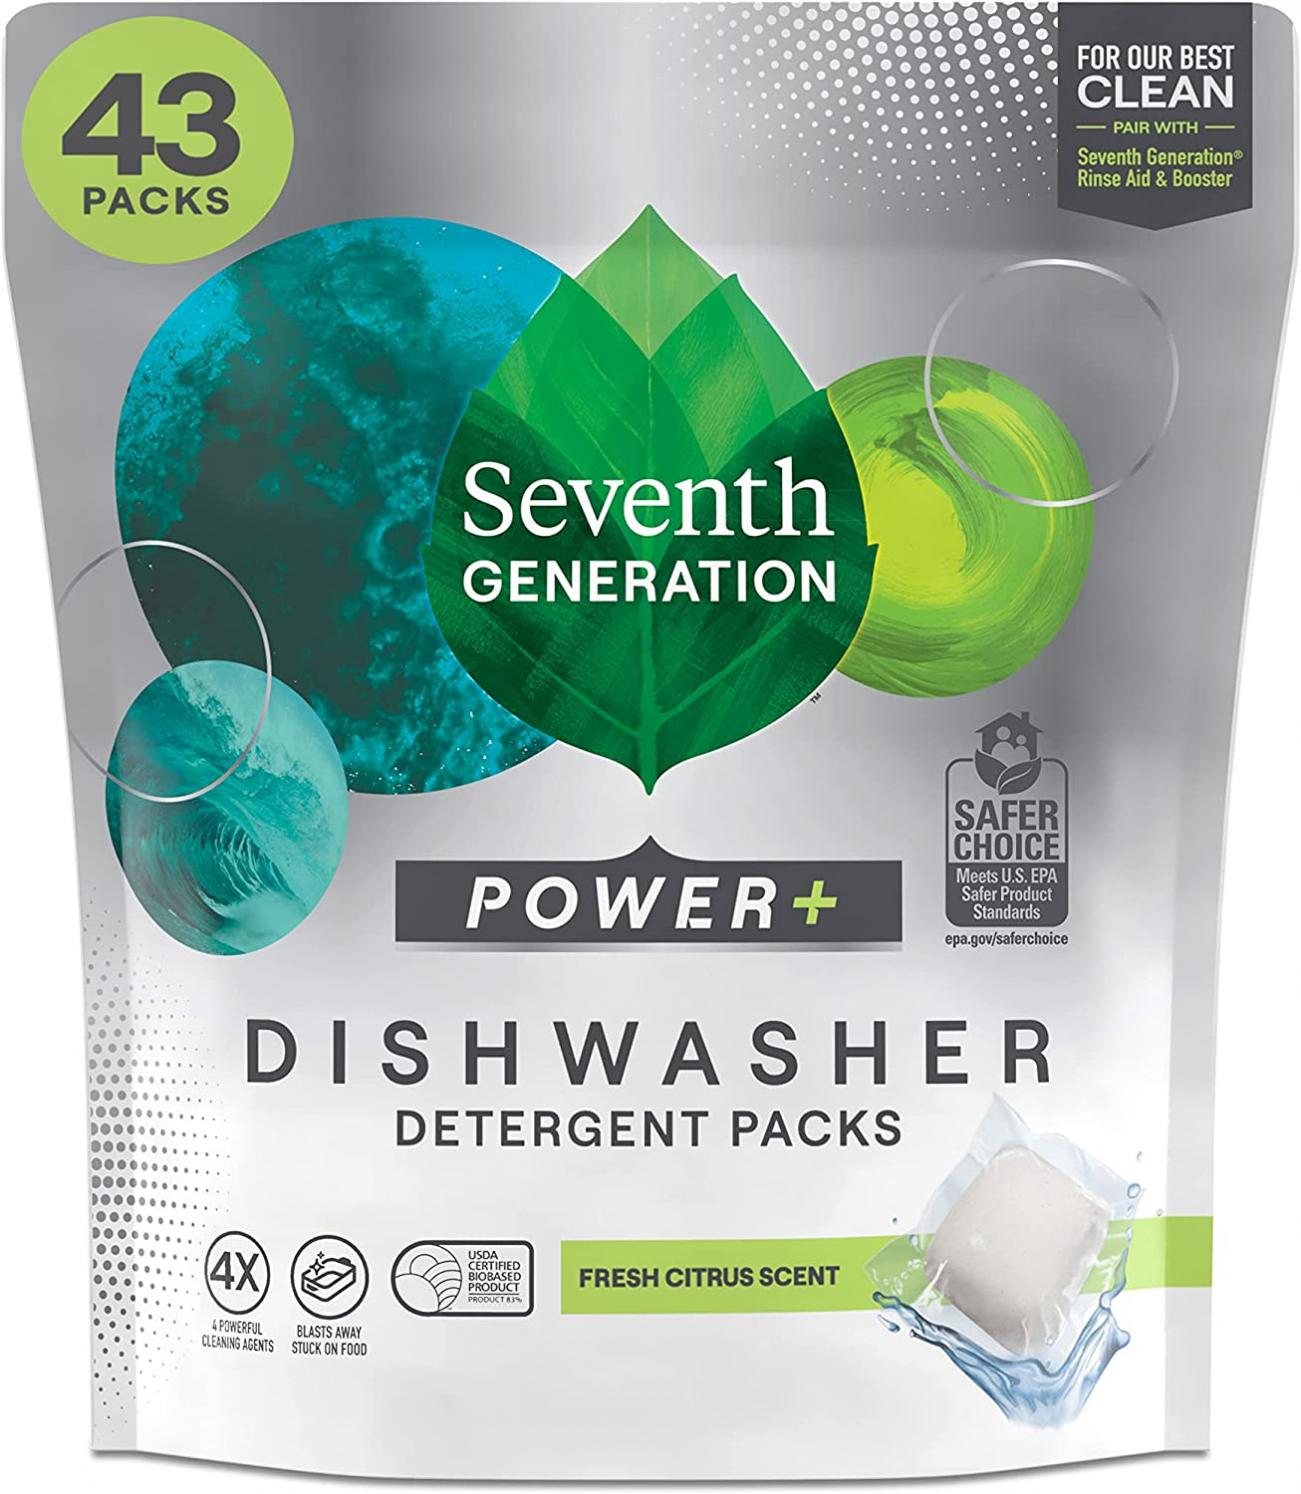 Seventh Generation Power+ Dishwasher Detergent Packs for Sparkling Dishes Fresh Citrus Scent Dishwasher Tabs 43 Count